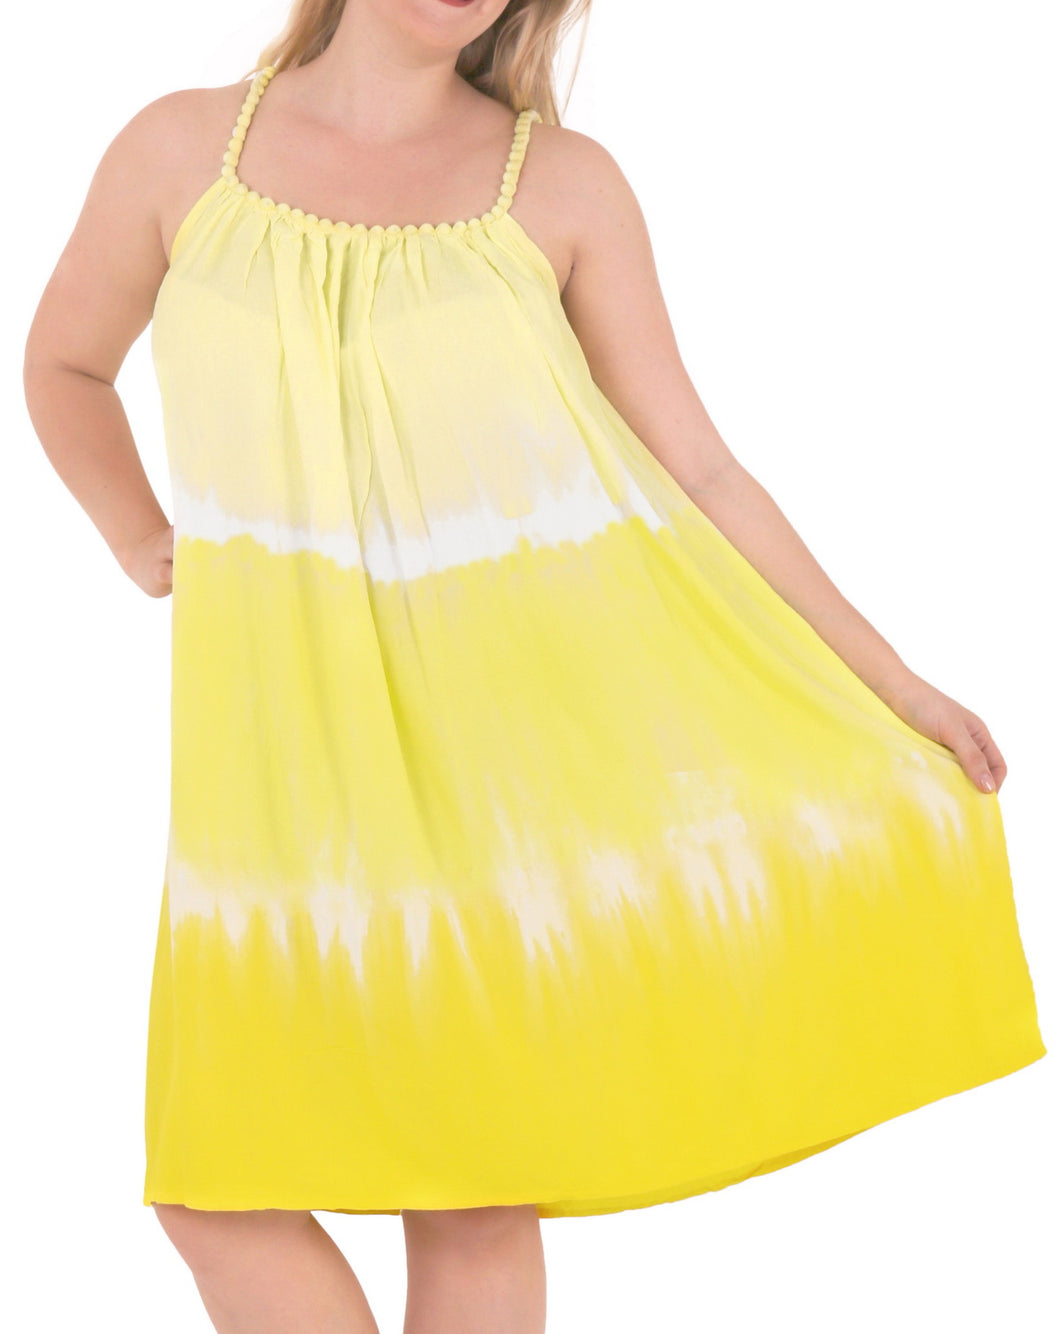 la-leela-bikni-swimwear-cover-ups-rayon-tie-dye-cruise-length-knee-halter-top-osfm-14-18-l-2x-yellow_3313